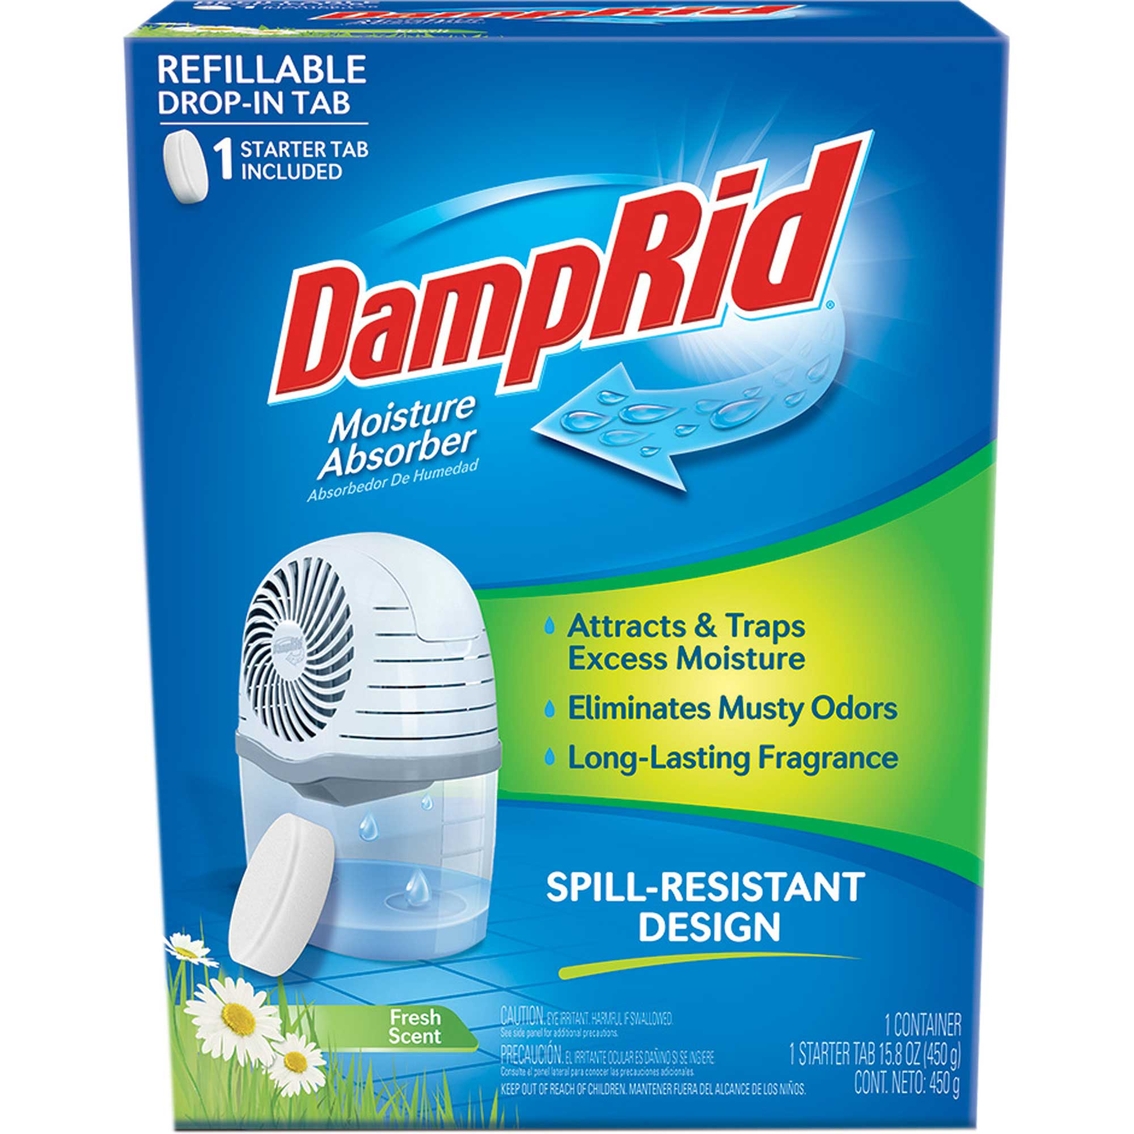 Damprid Fresh Scent Moisture Absorber Refillable Drop-in Tab Starter Kit, Air Fresheners, Household